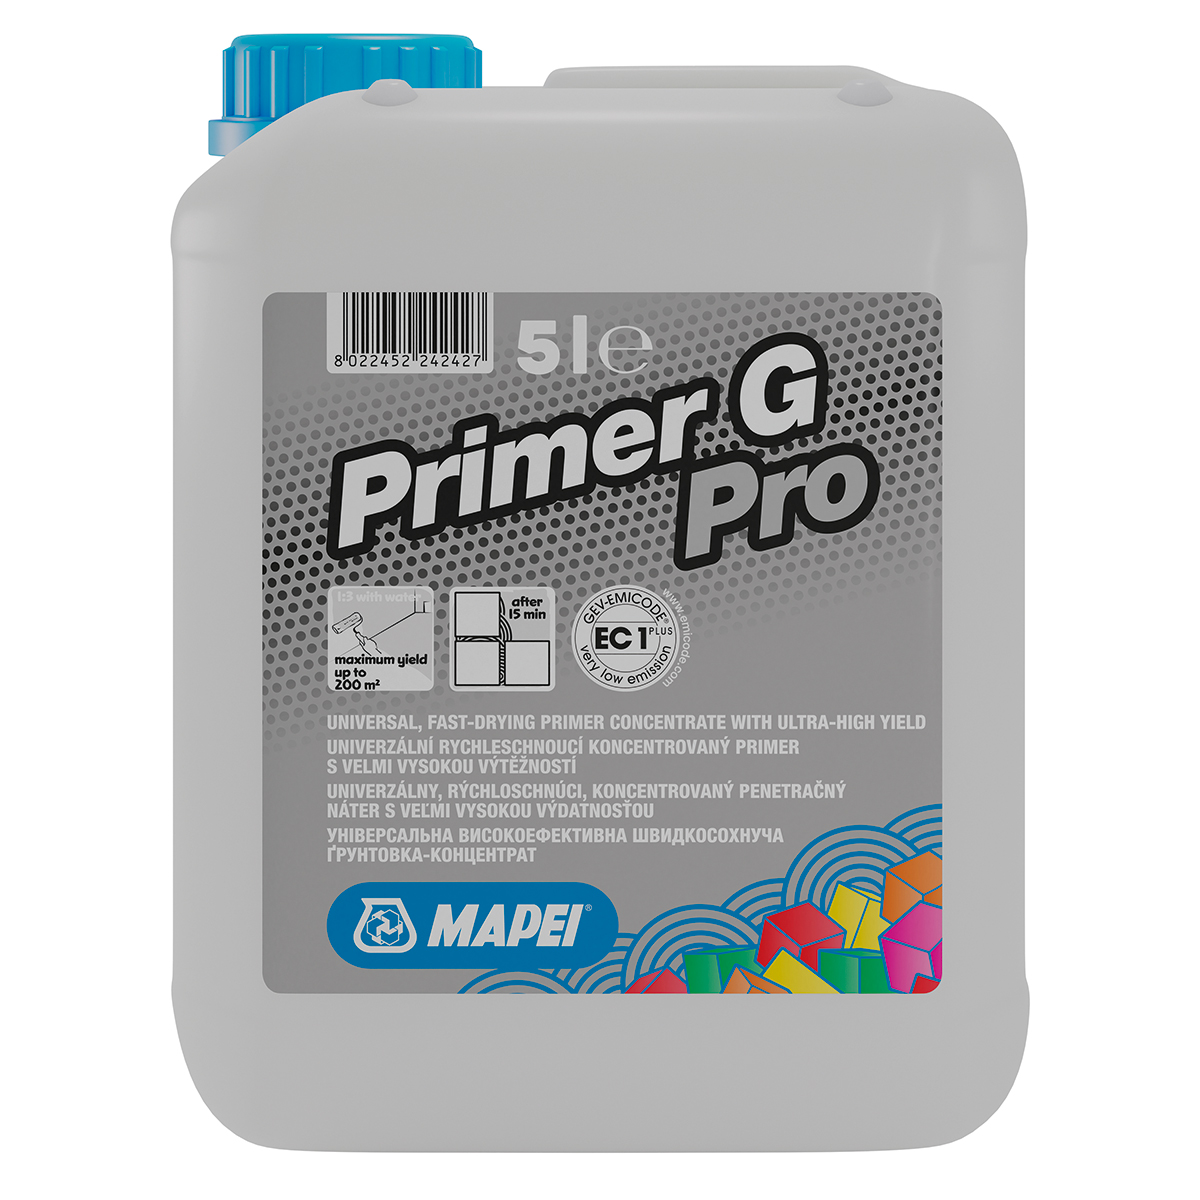 Primer G Pro 5l EXP